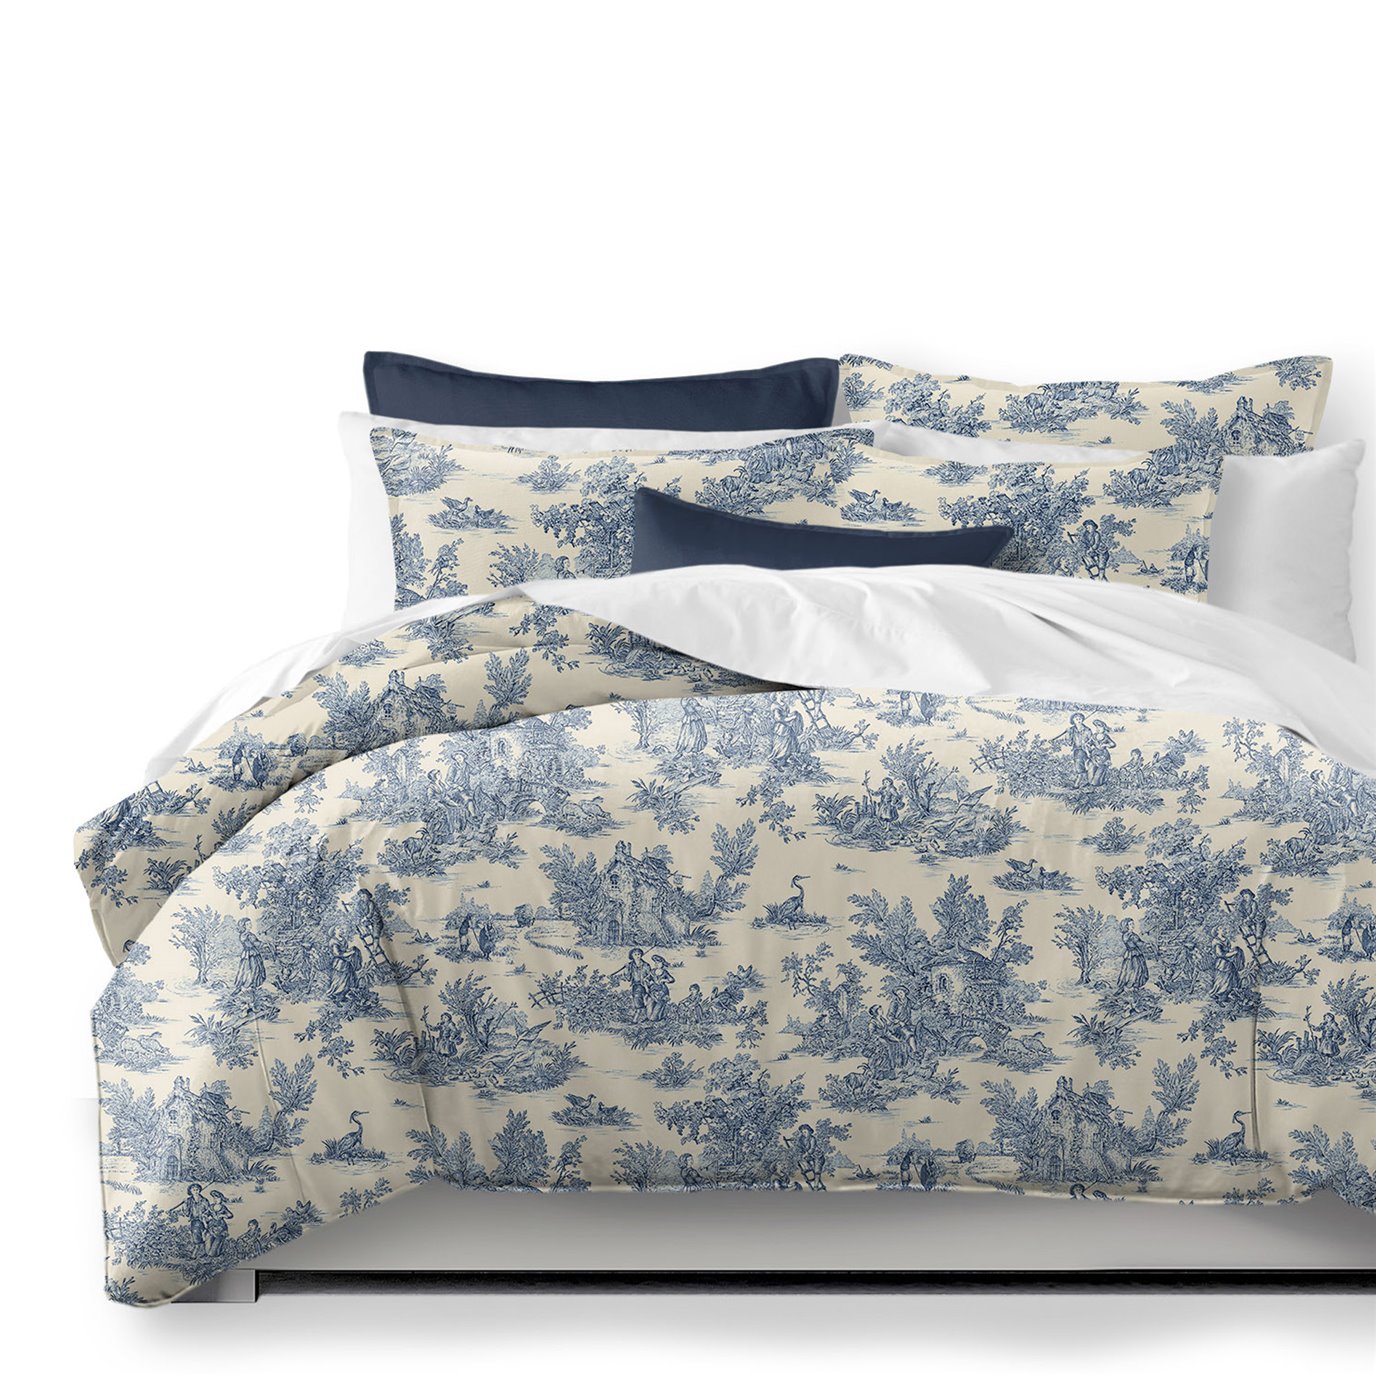 Bouclair Blue Duvet Cover and Pillow Sham(s) Set - Size Full